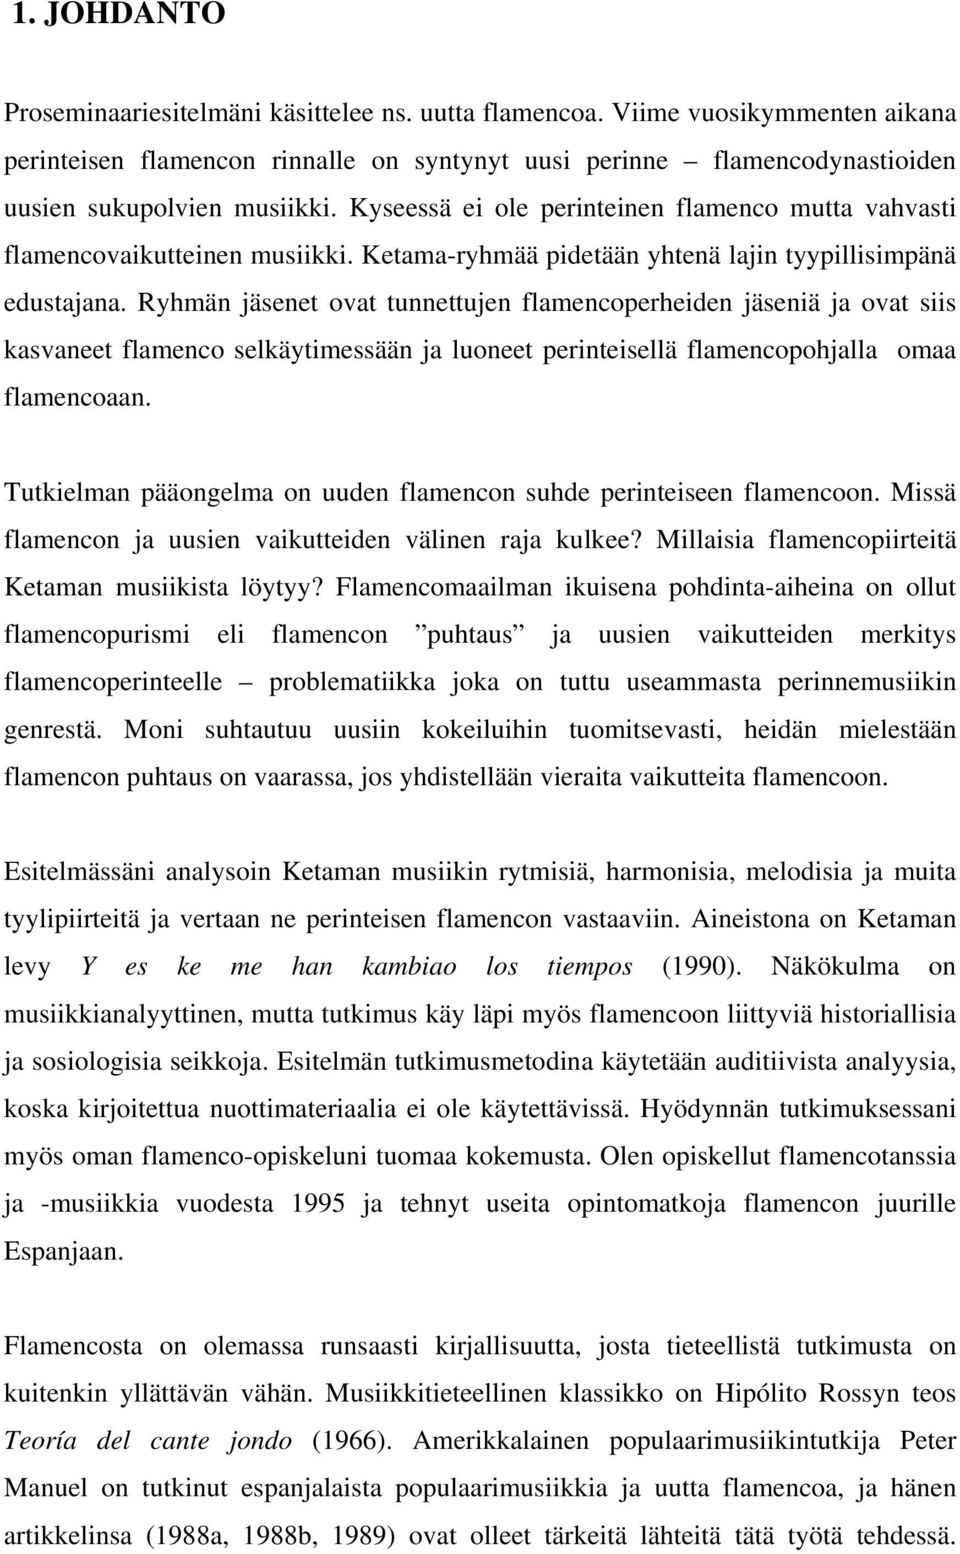 FLAMENCON UUDET SUKUPOLVET. Analyysi Ketaman Y es ke me han kambiao los  tiempos-levyn tyylipiirteistä. - PDF Free Download